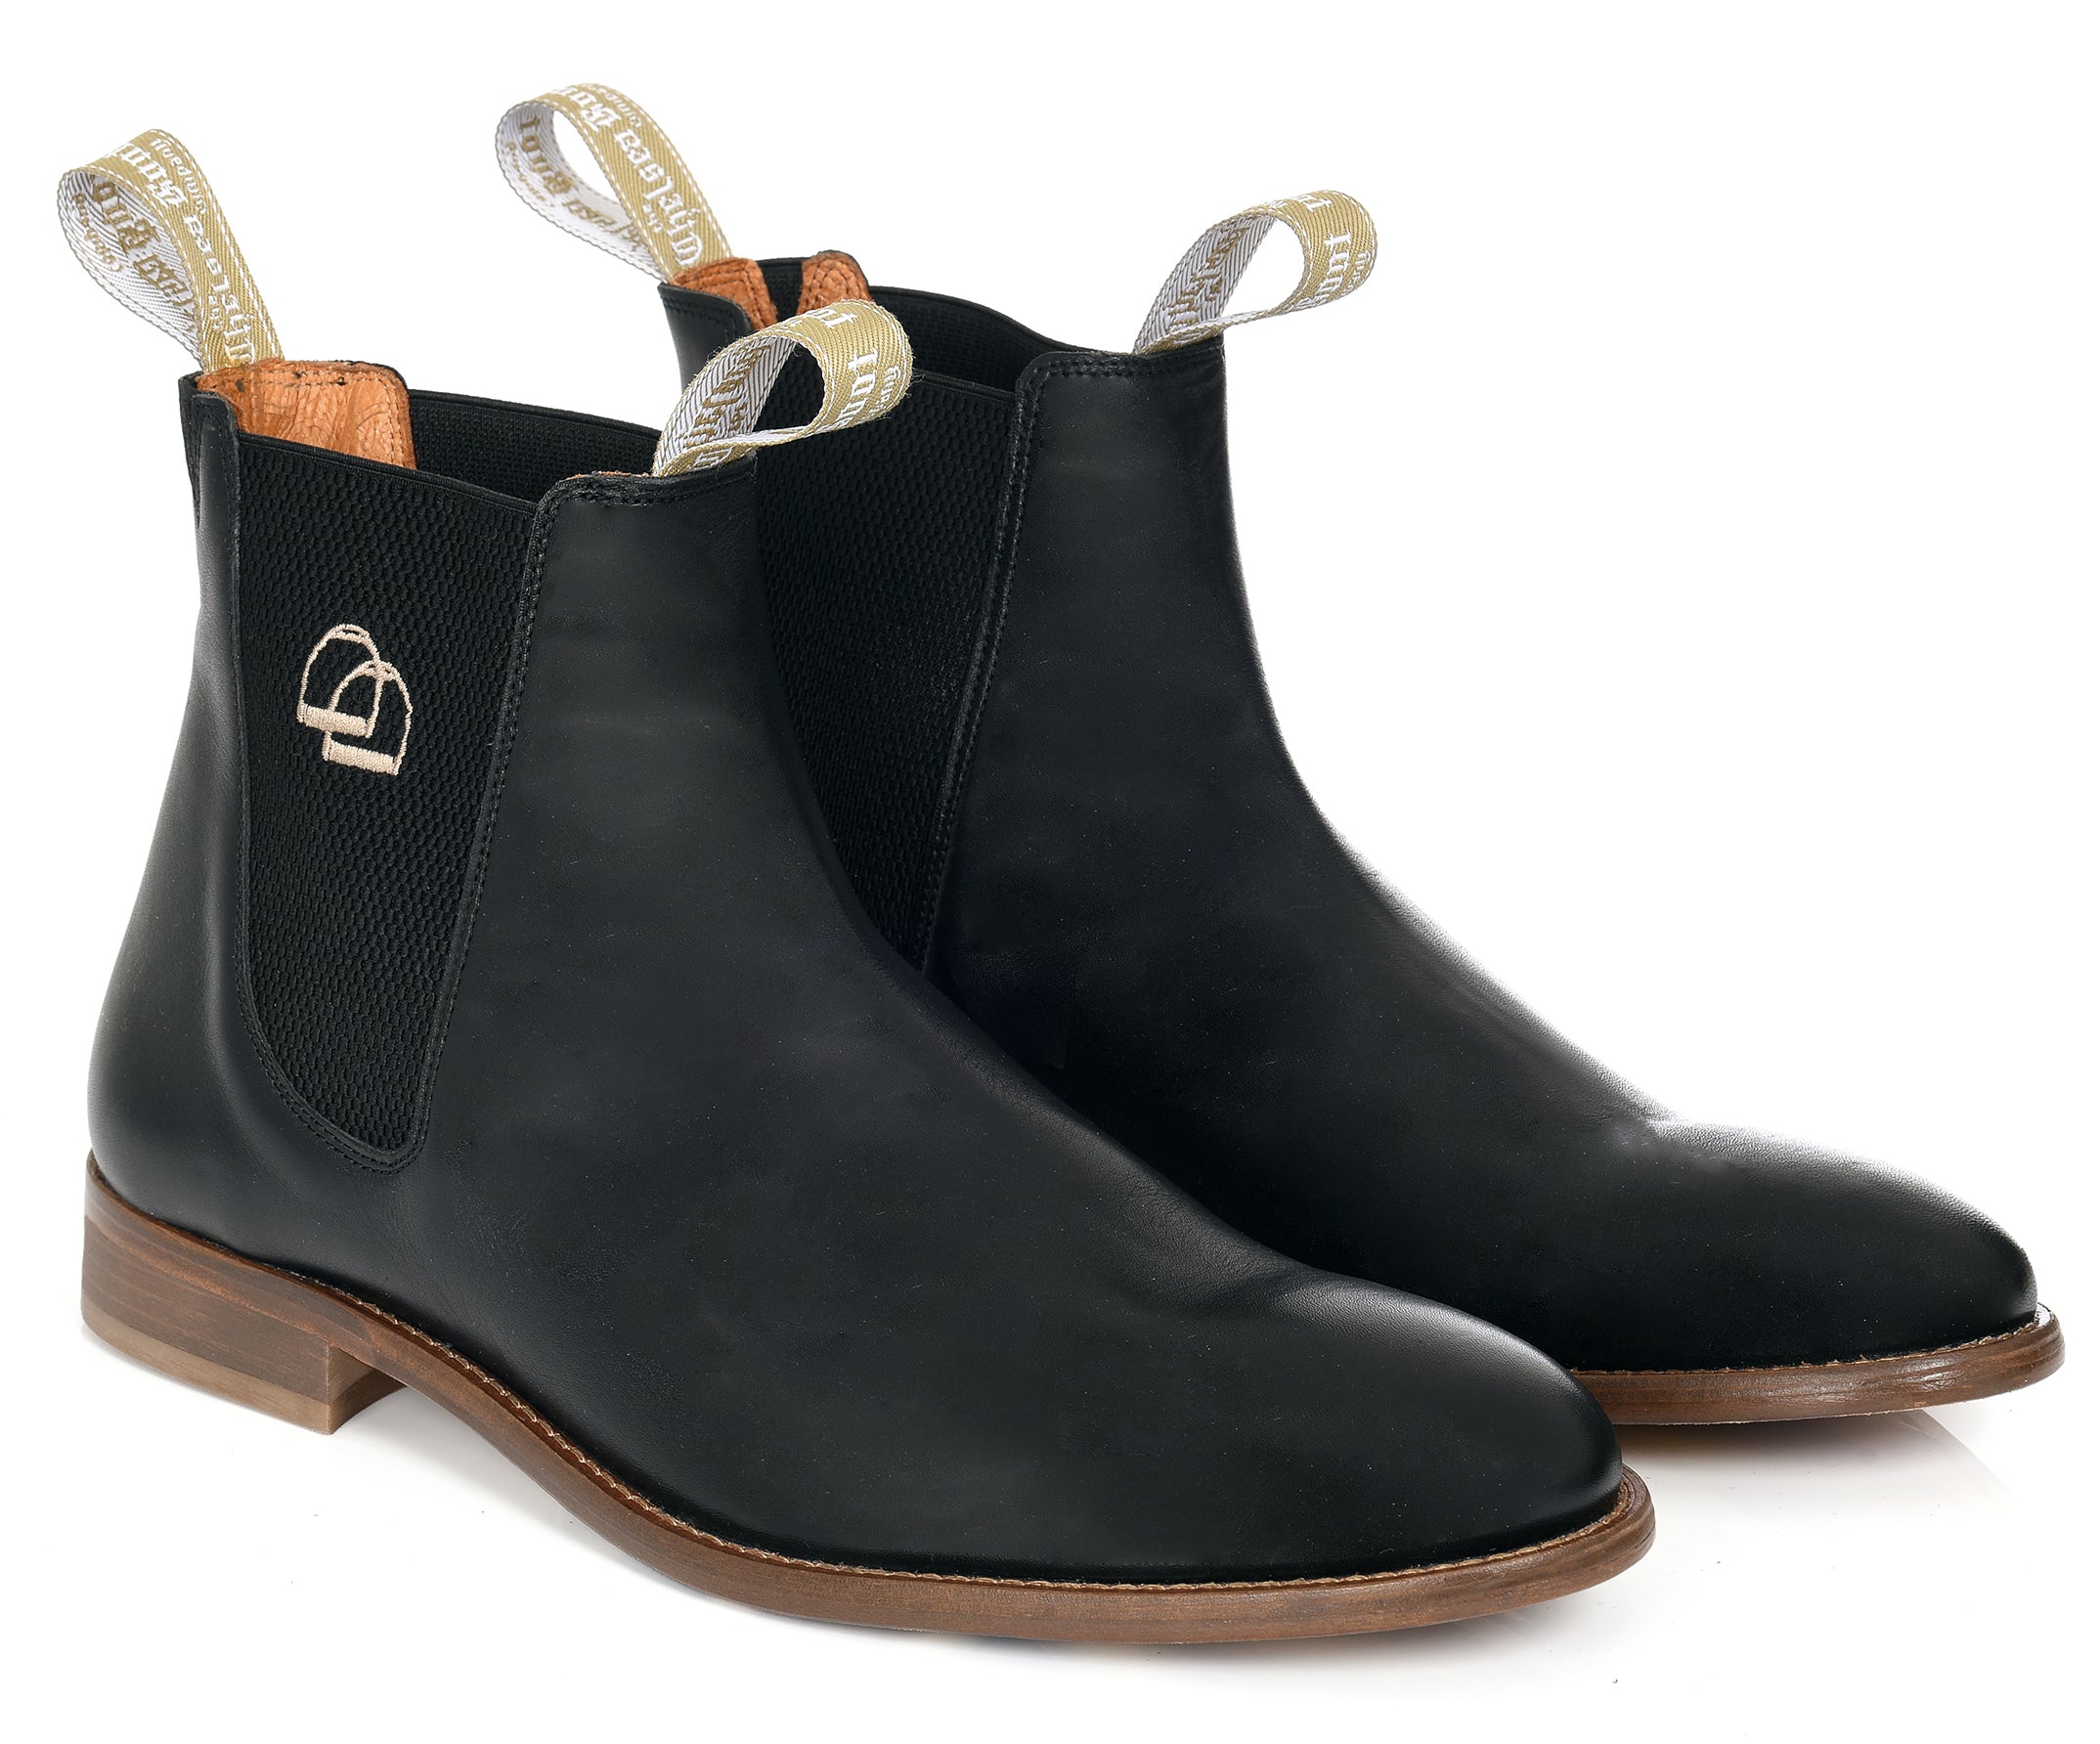 Men’s The Original Chelsea Boot - Black 7.5 Uk The Chelsea Boot Co Est. 1851